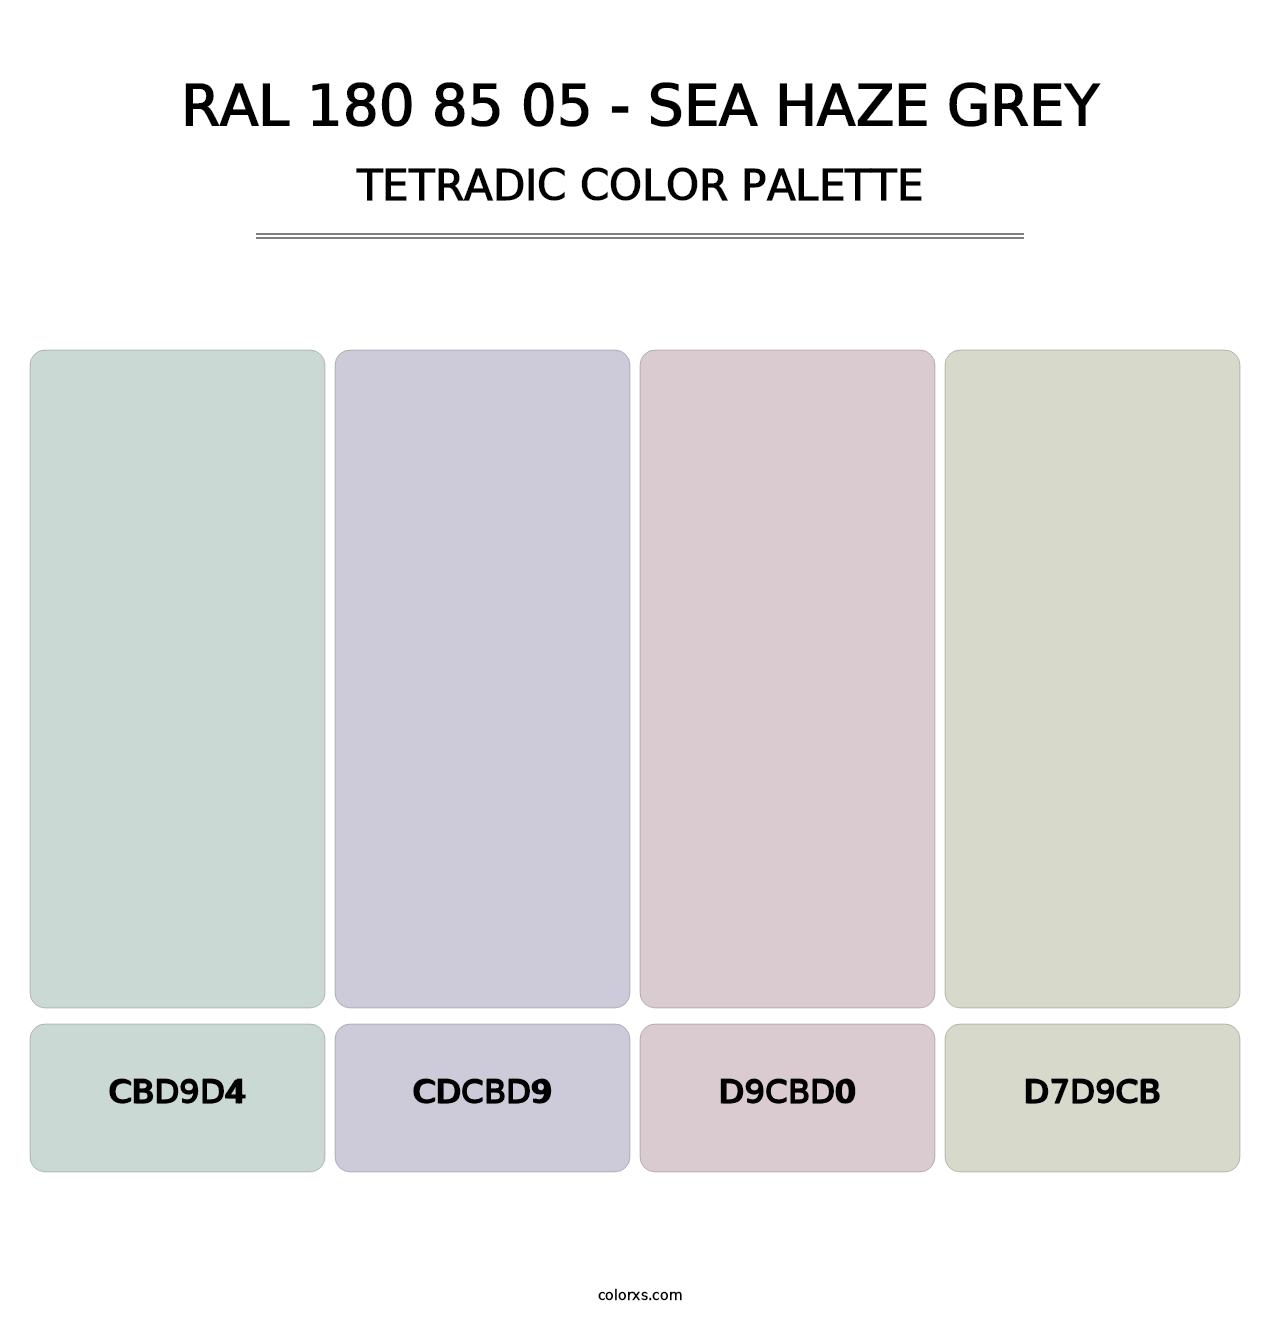 RAL 180 85 05 - Sea Haze Grey - Tetradic Color Palette